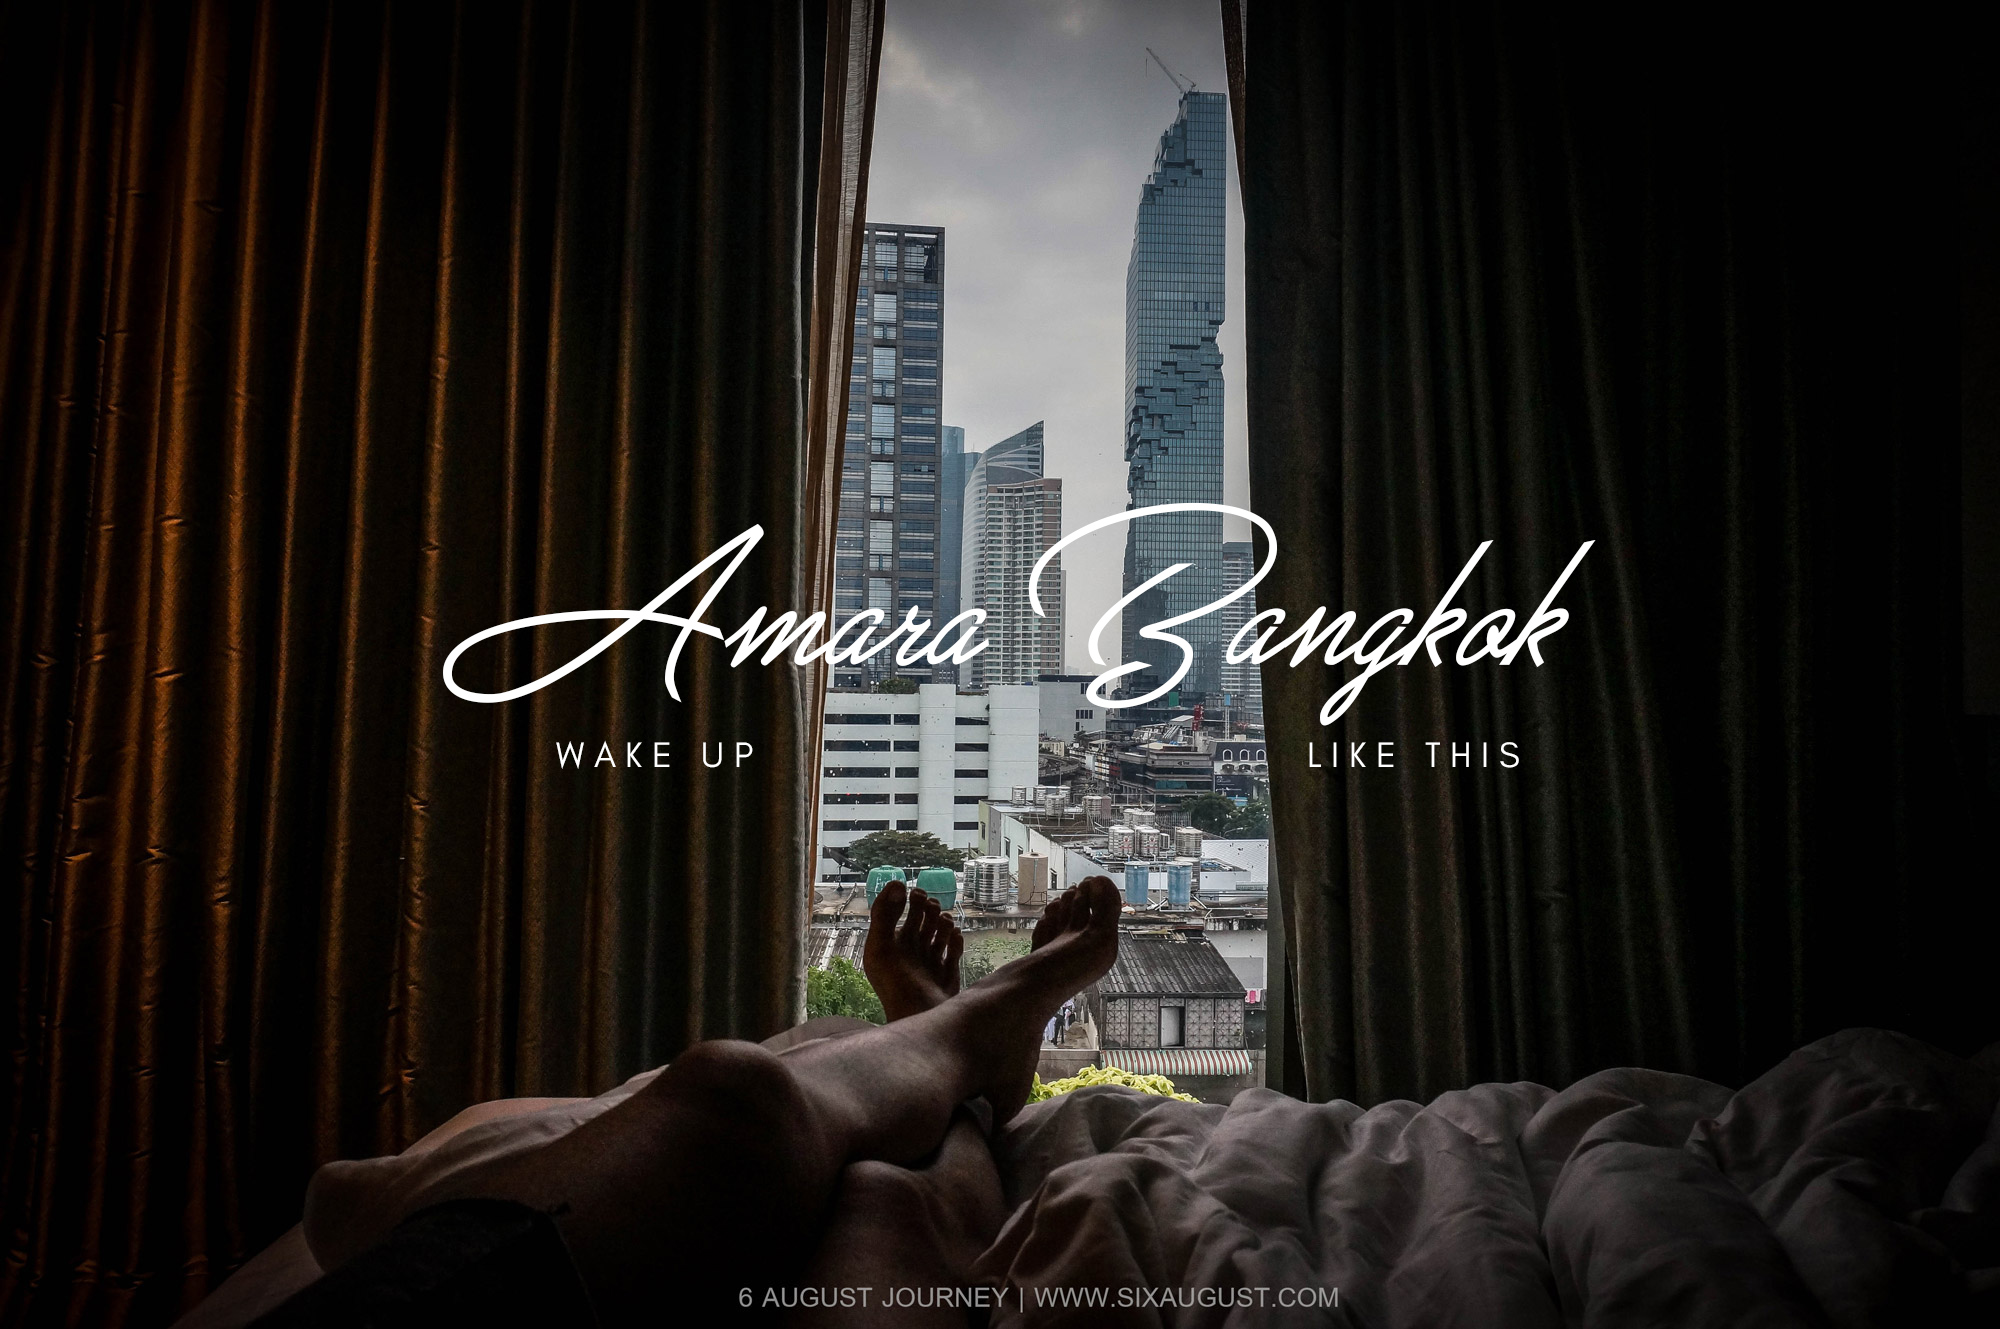 Amara Bangkok